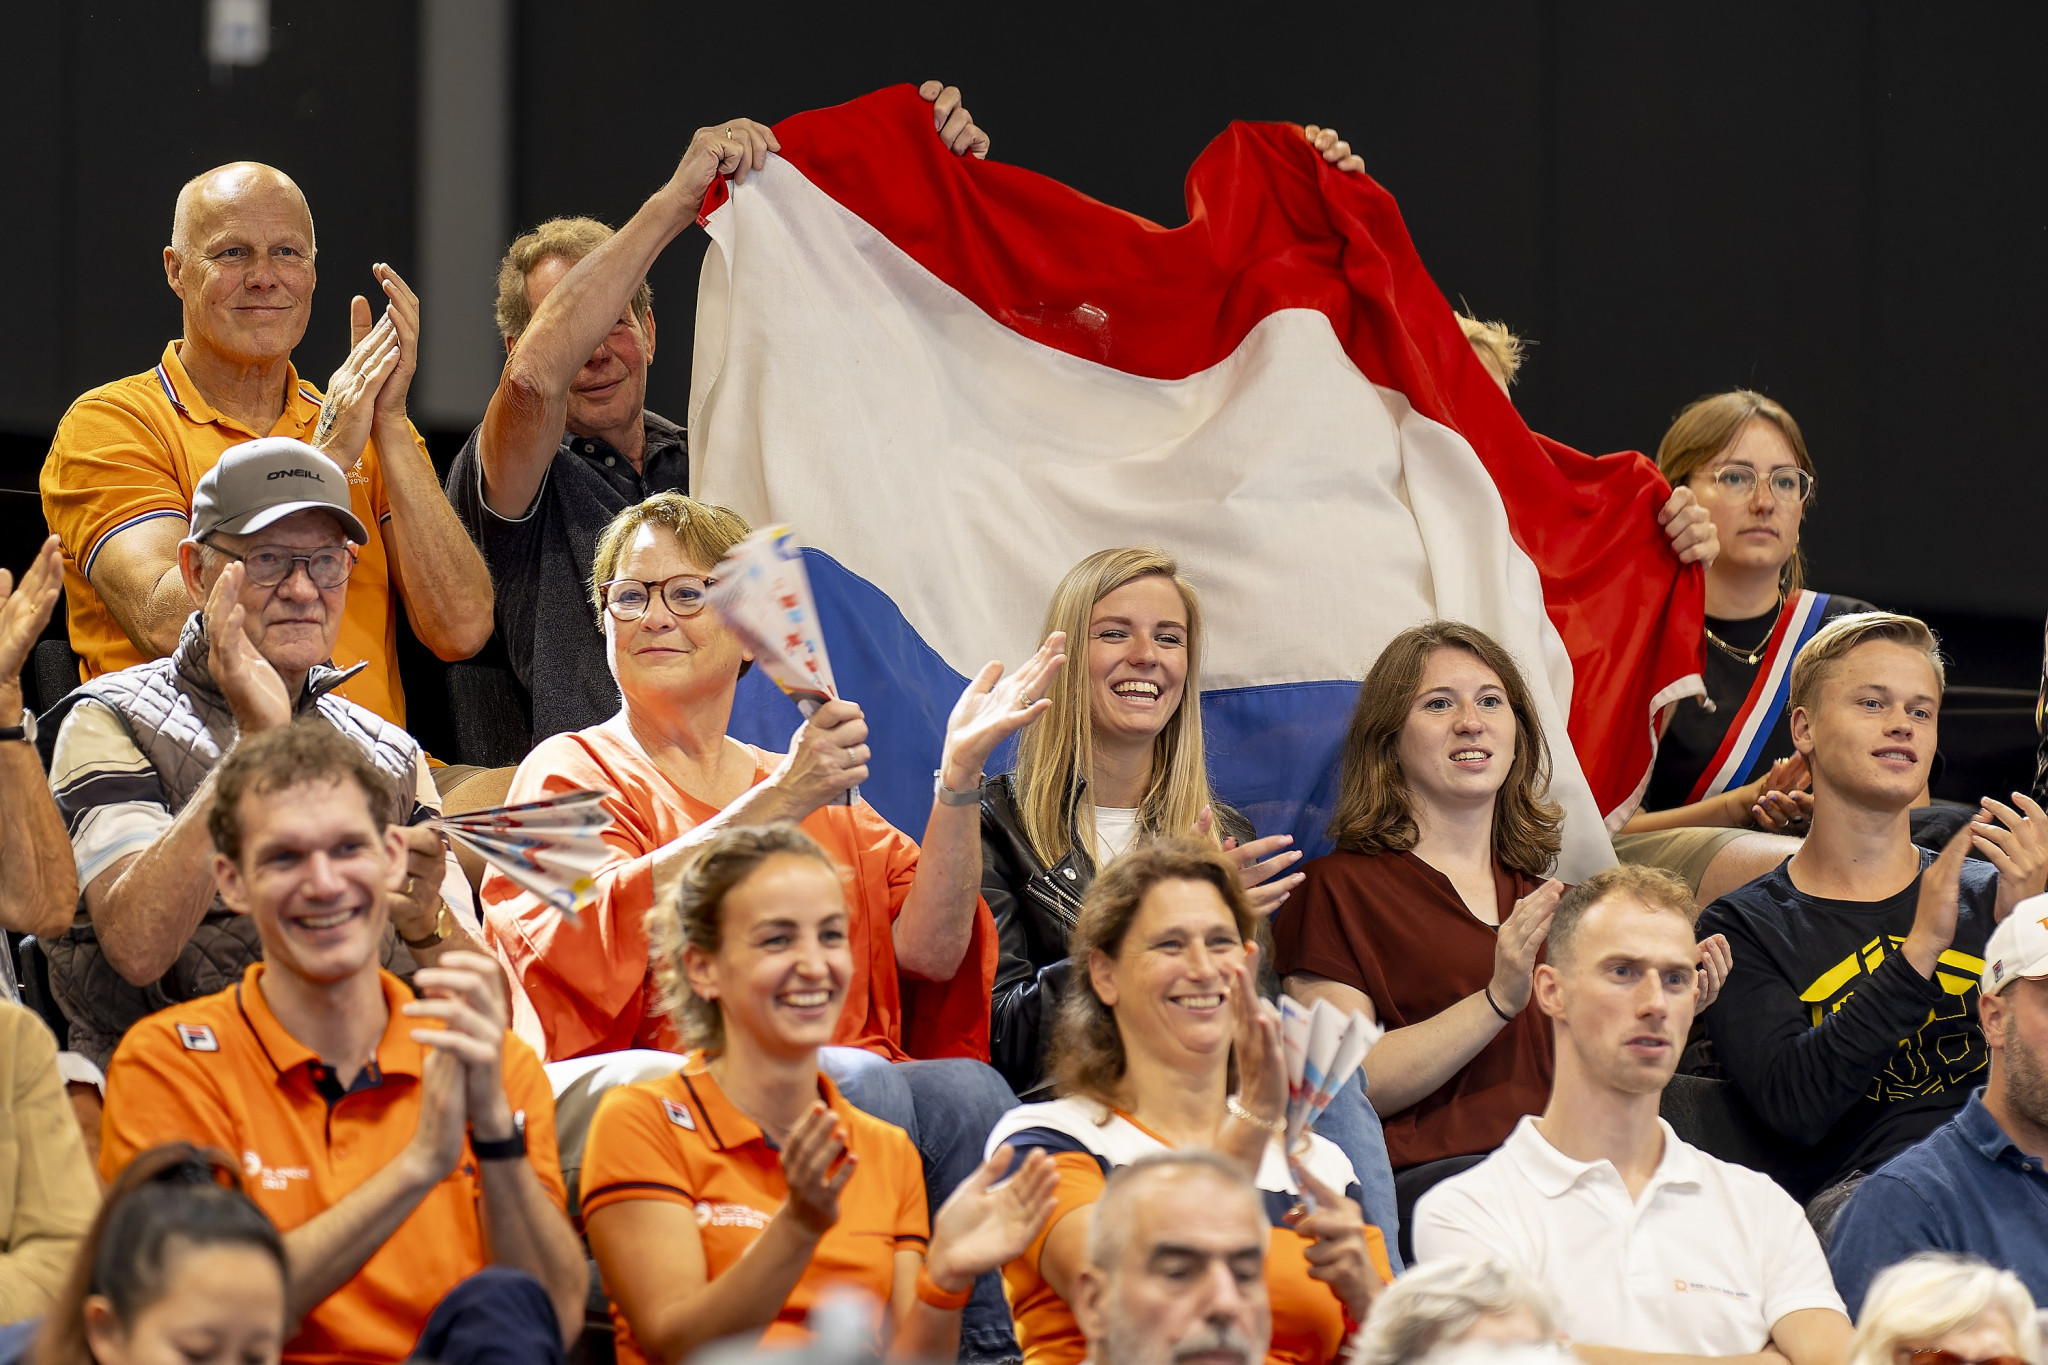 Dutch delight as wheelchair basketball debuts at European Para Championships